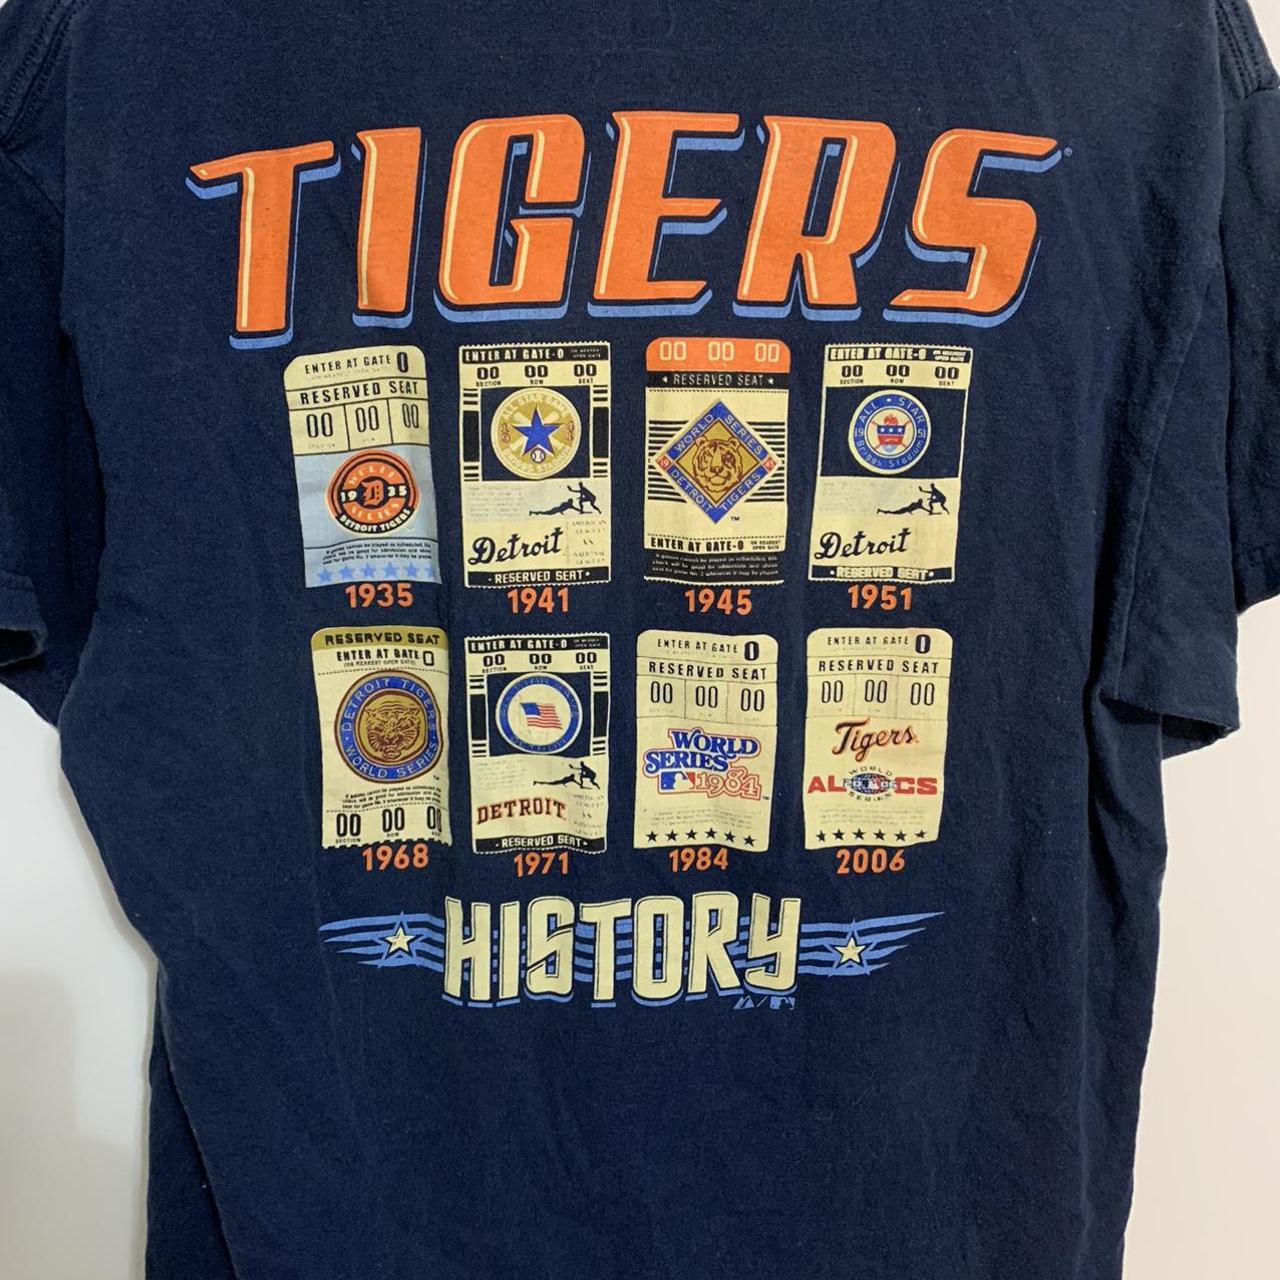 Vintage Detroit tigers t shirt large fits like medium - Depop